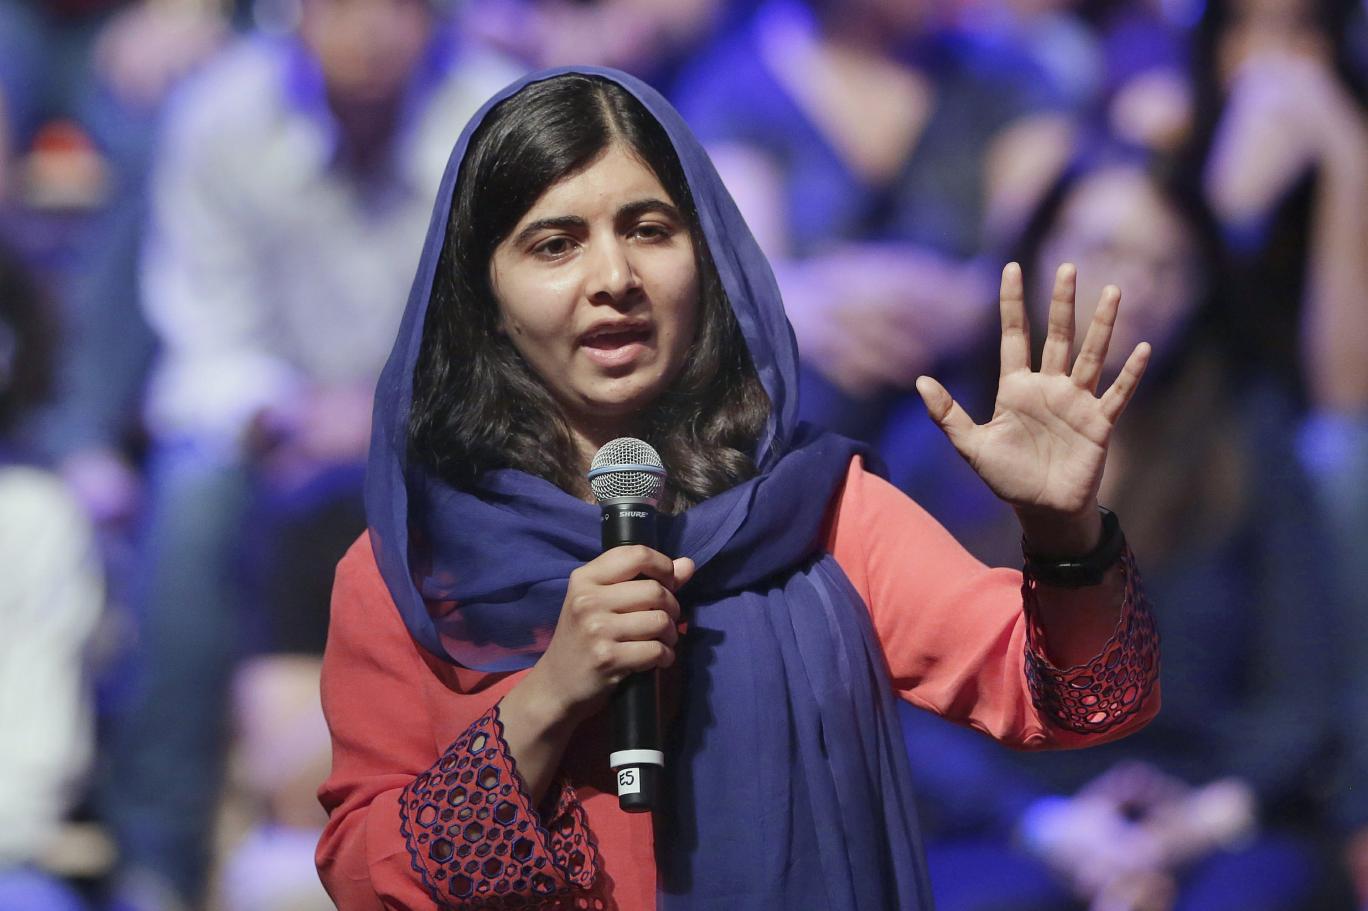 Malala Yusufzay, Hollywood'daki Müslüman temsilini eleştirdi: "Buraya ait olmadığımızı söylüyorlarmış gibi"